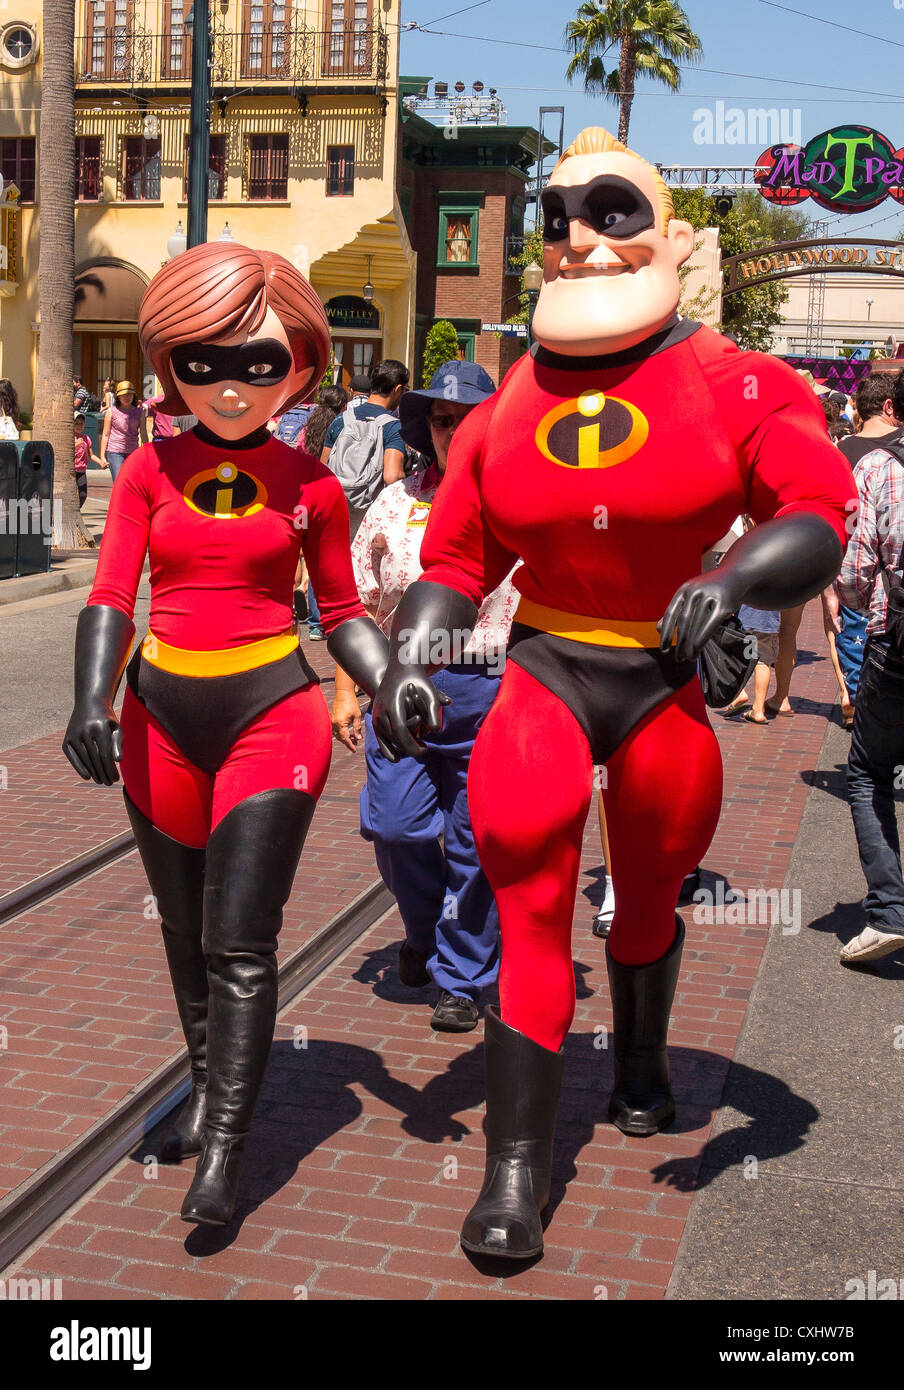 ANAHEIM, CALIFORNIA, USA - Mr. and Mrs. Incredible Disney characters at California Adventure Park amusement park. Stock Photo